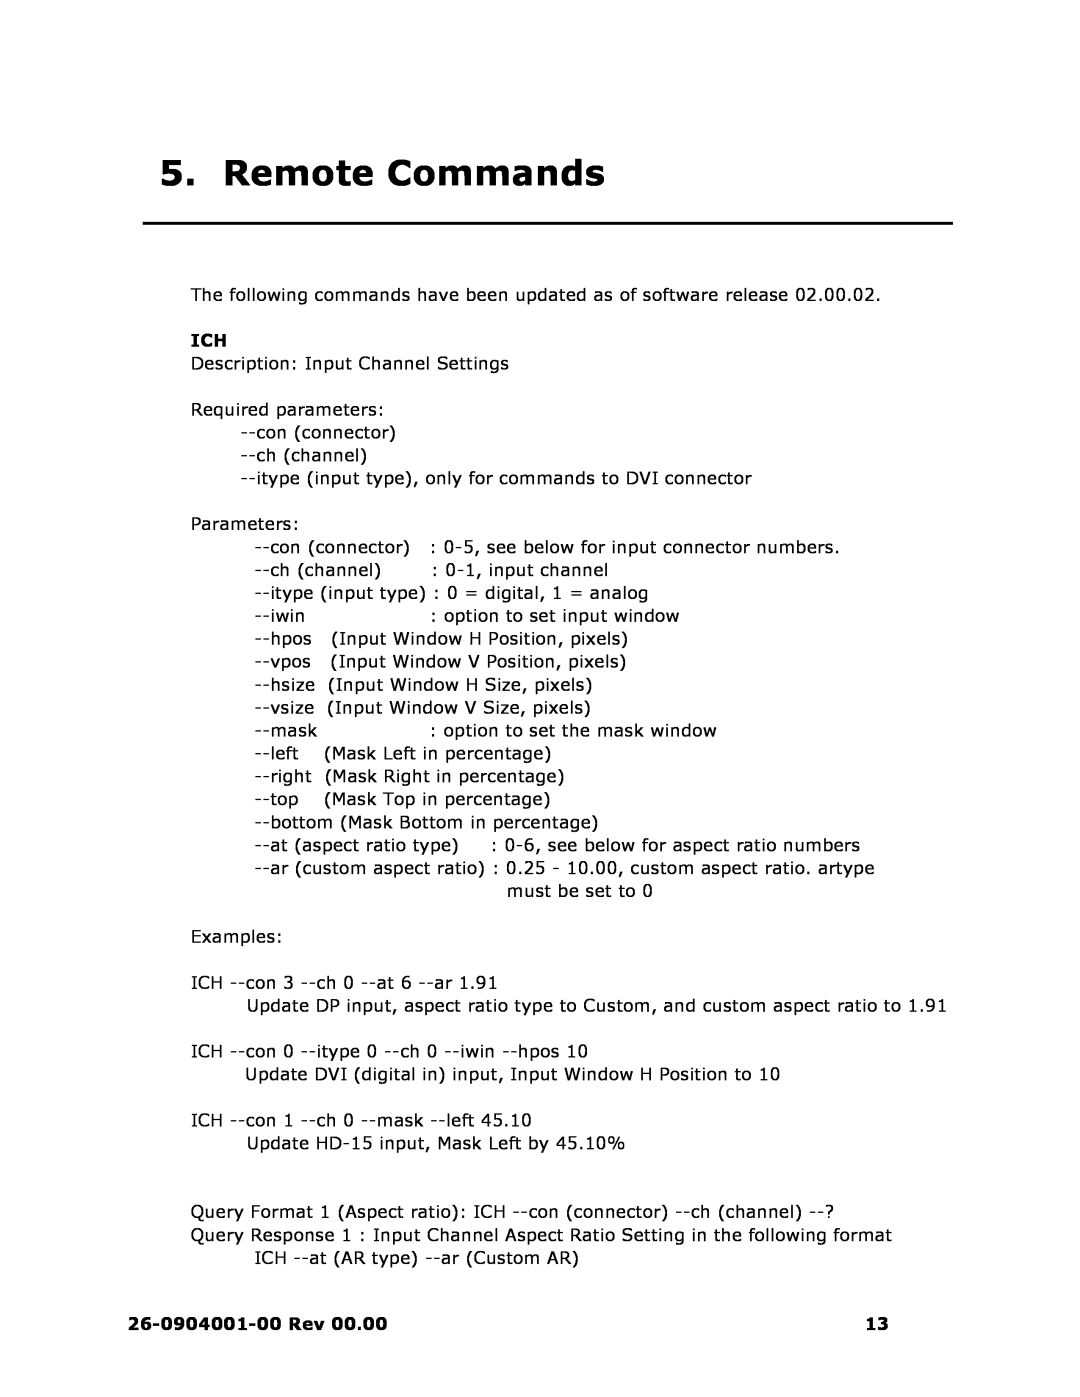 Barco II manual Remote Commands, 26-0904001-00 Rev 